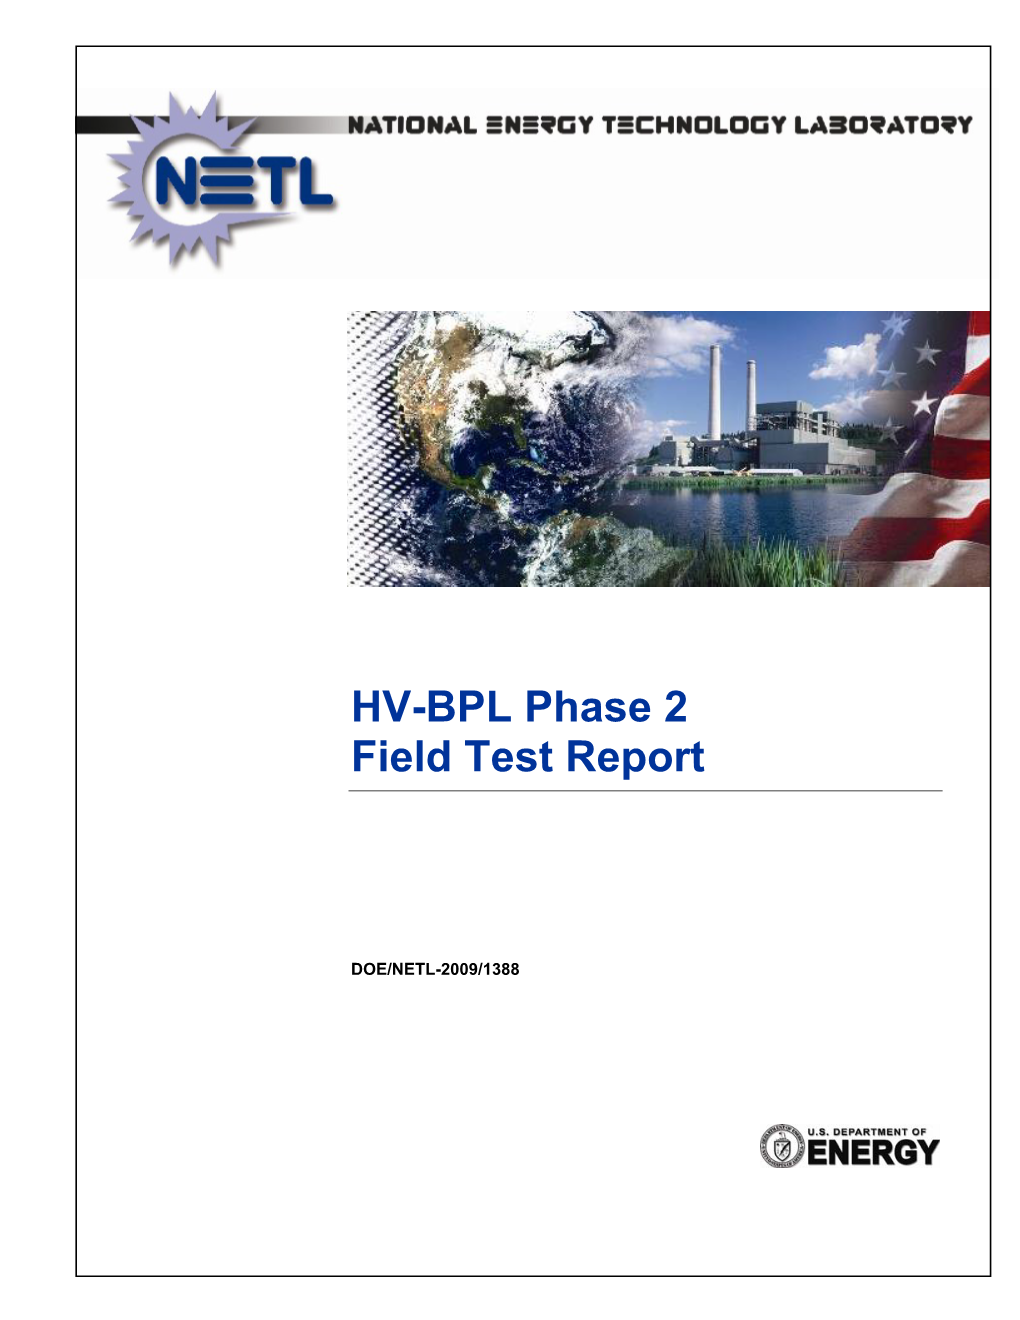 HV-BPL Phase 2 Field Test Report